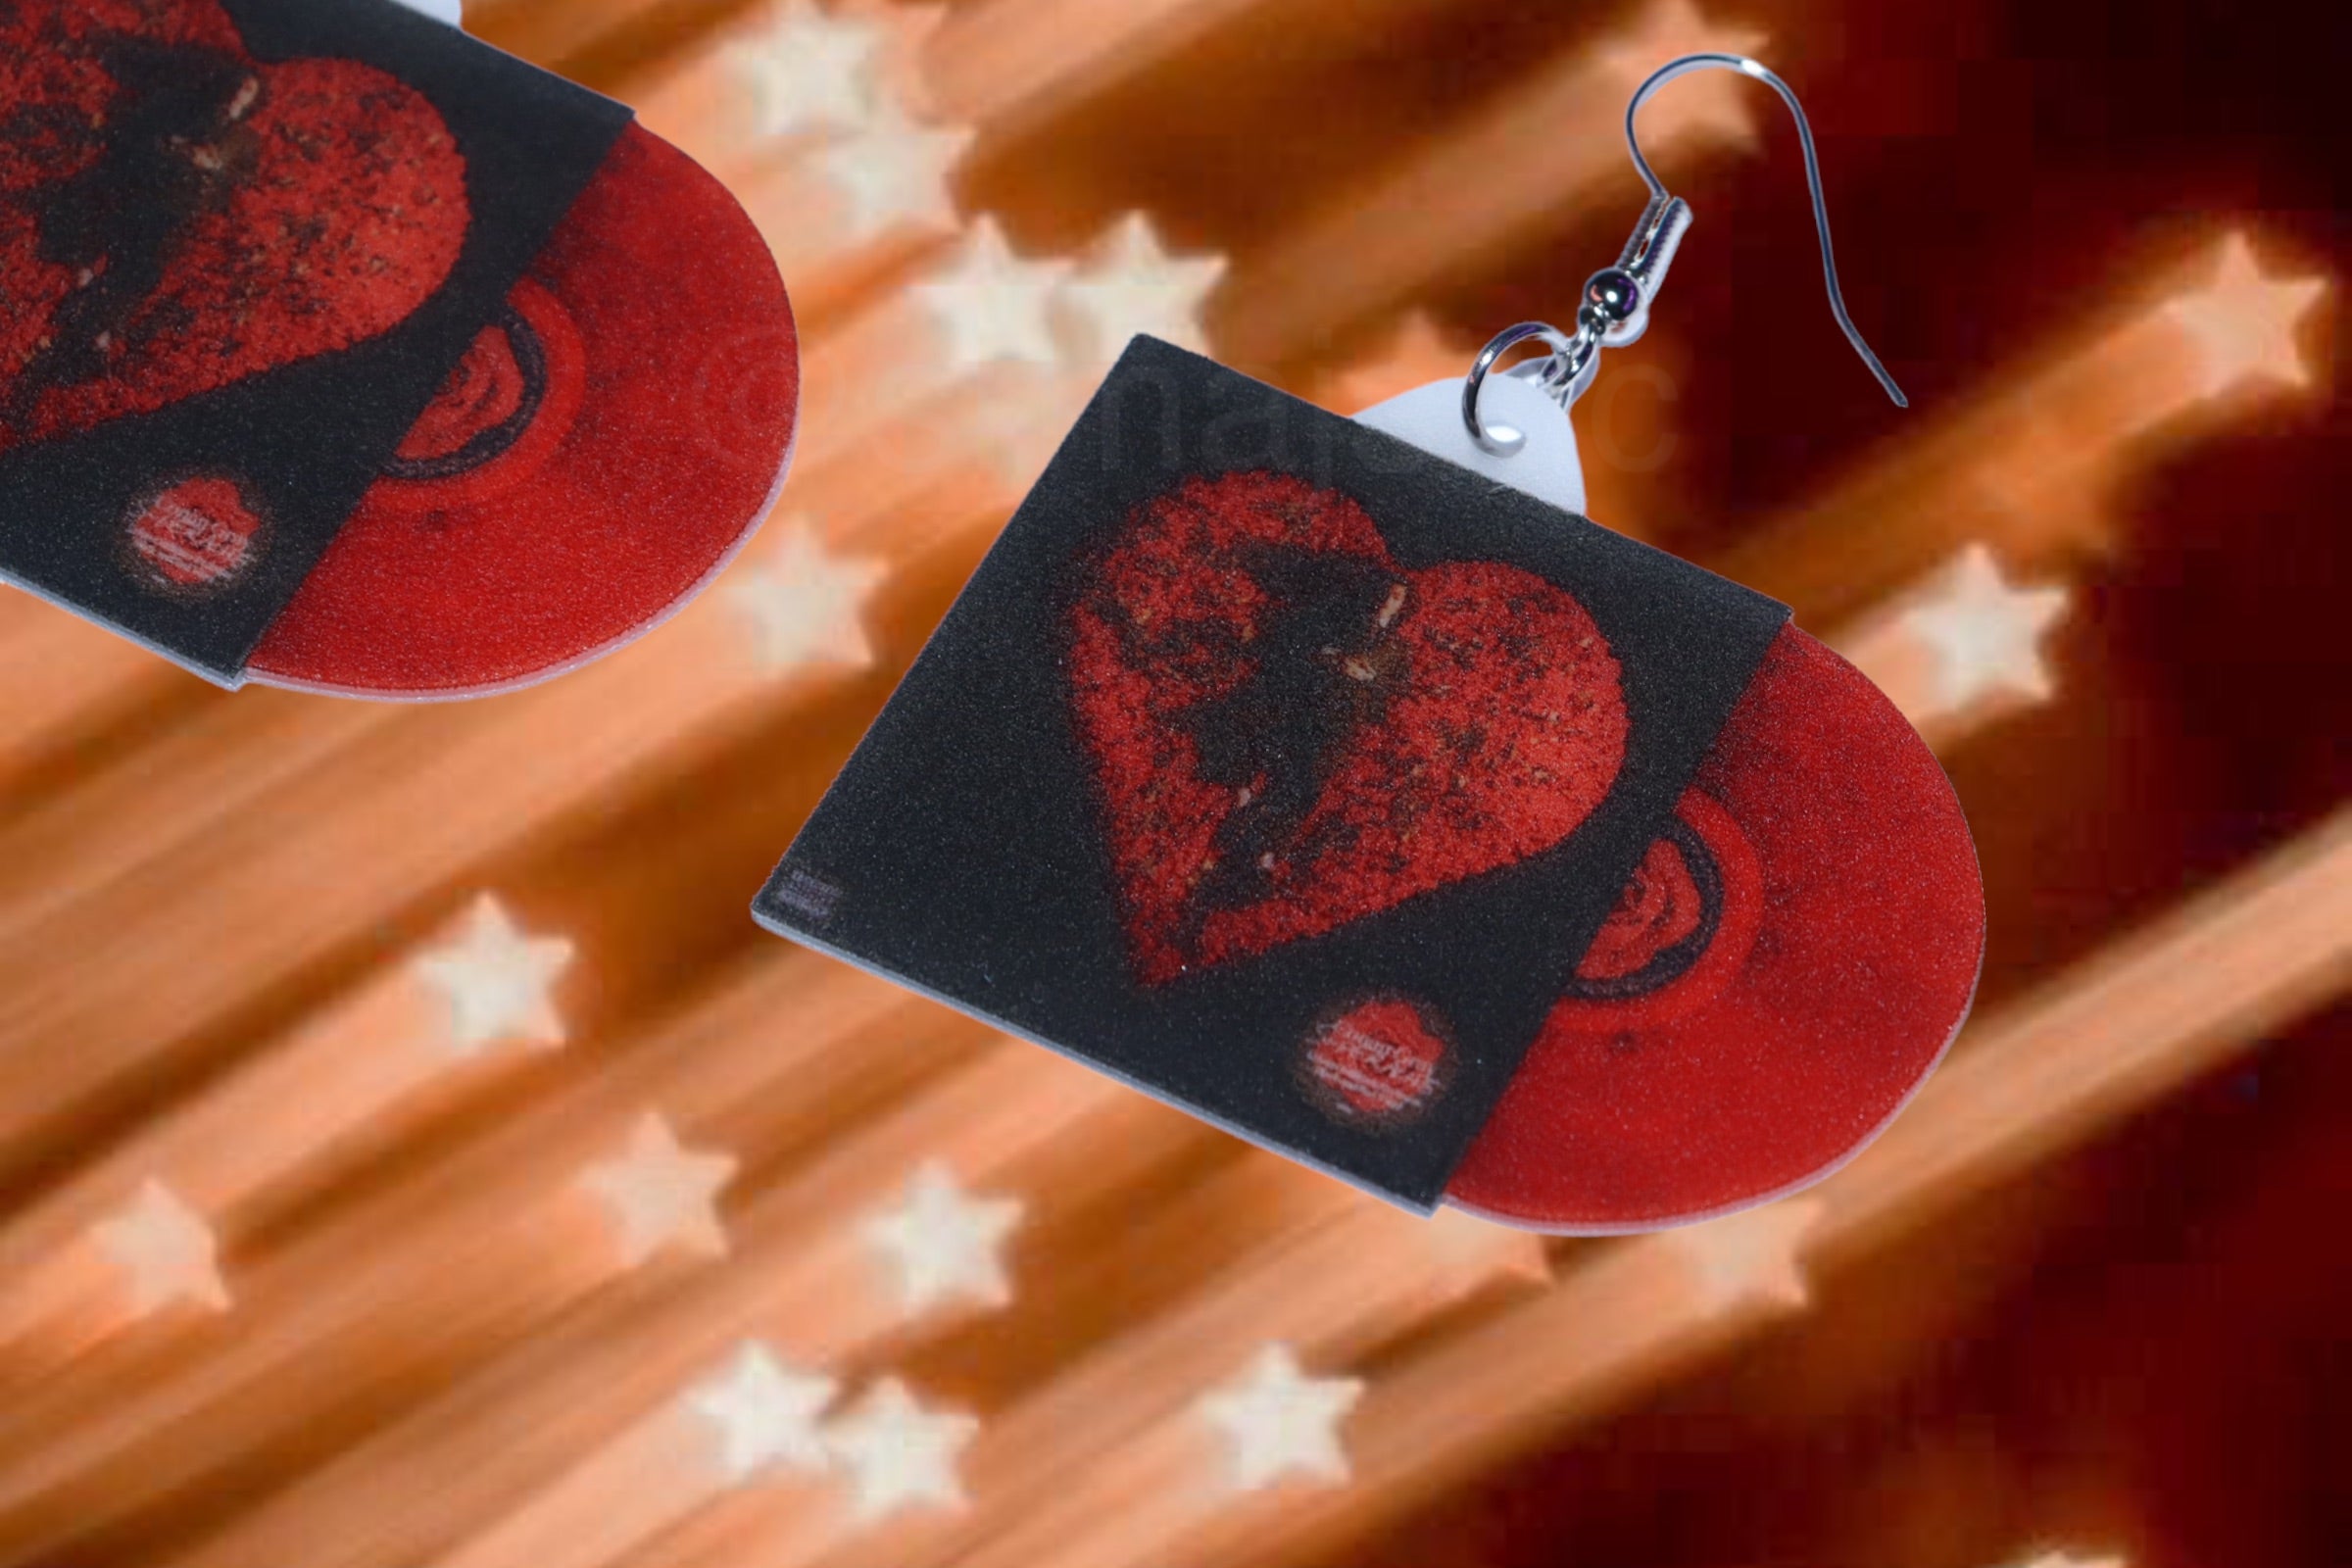 Superache Red Vinyl - Conan Gray Sticker for Sale by